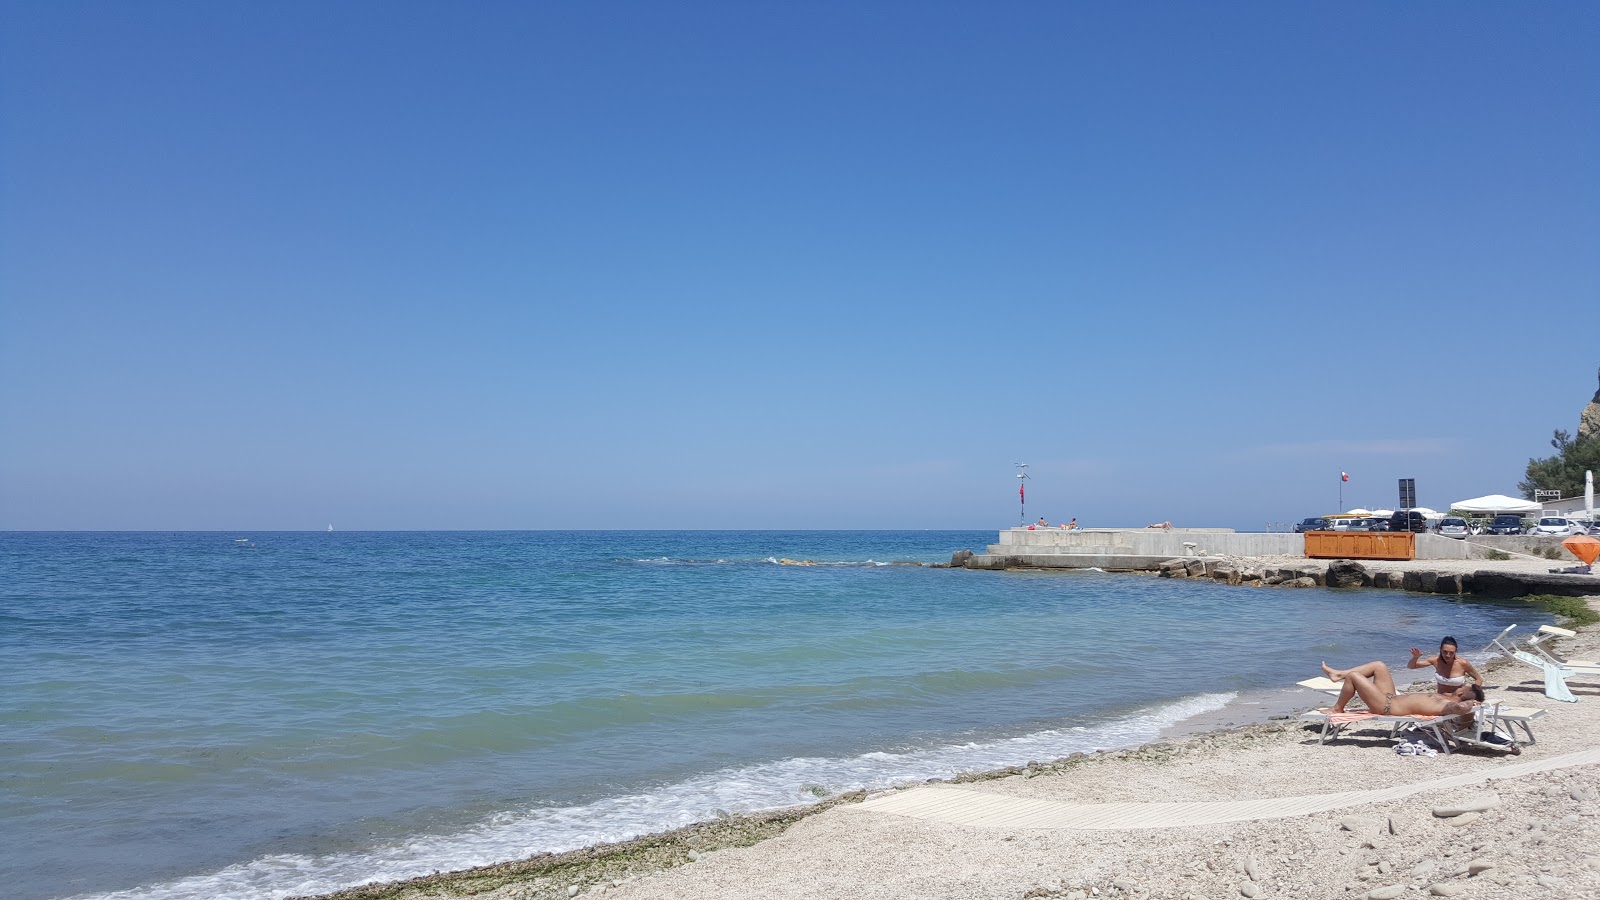 Fotografija Spiaggia Baia Vallugola z turkizna čista voda površino